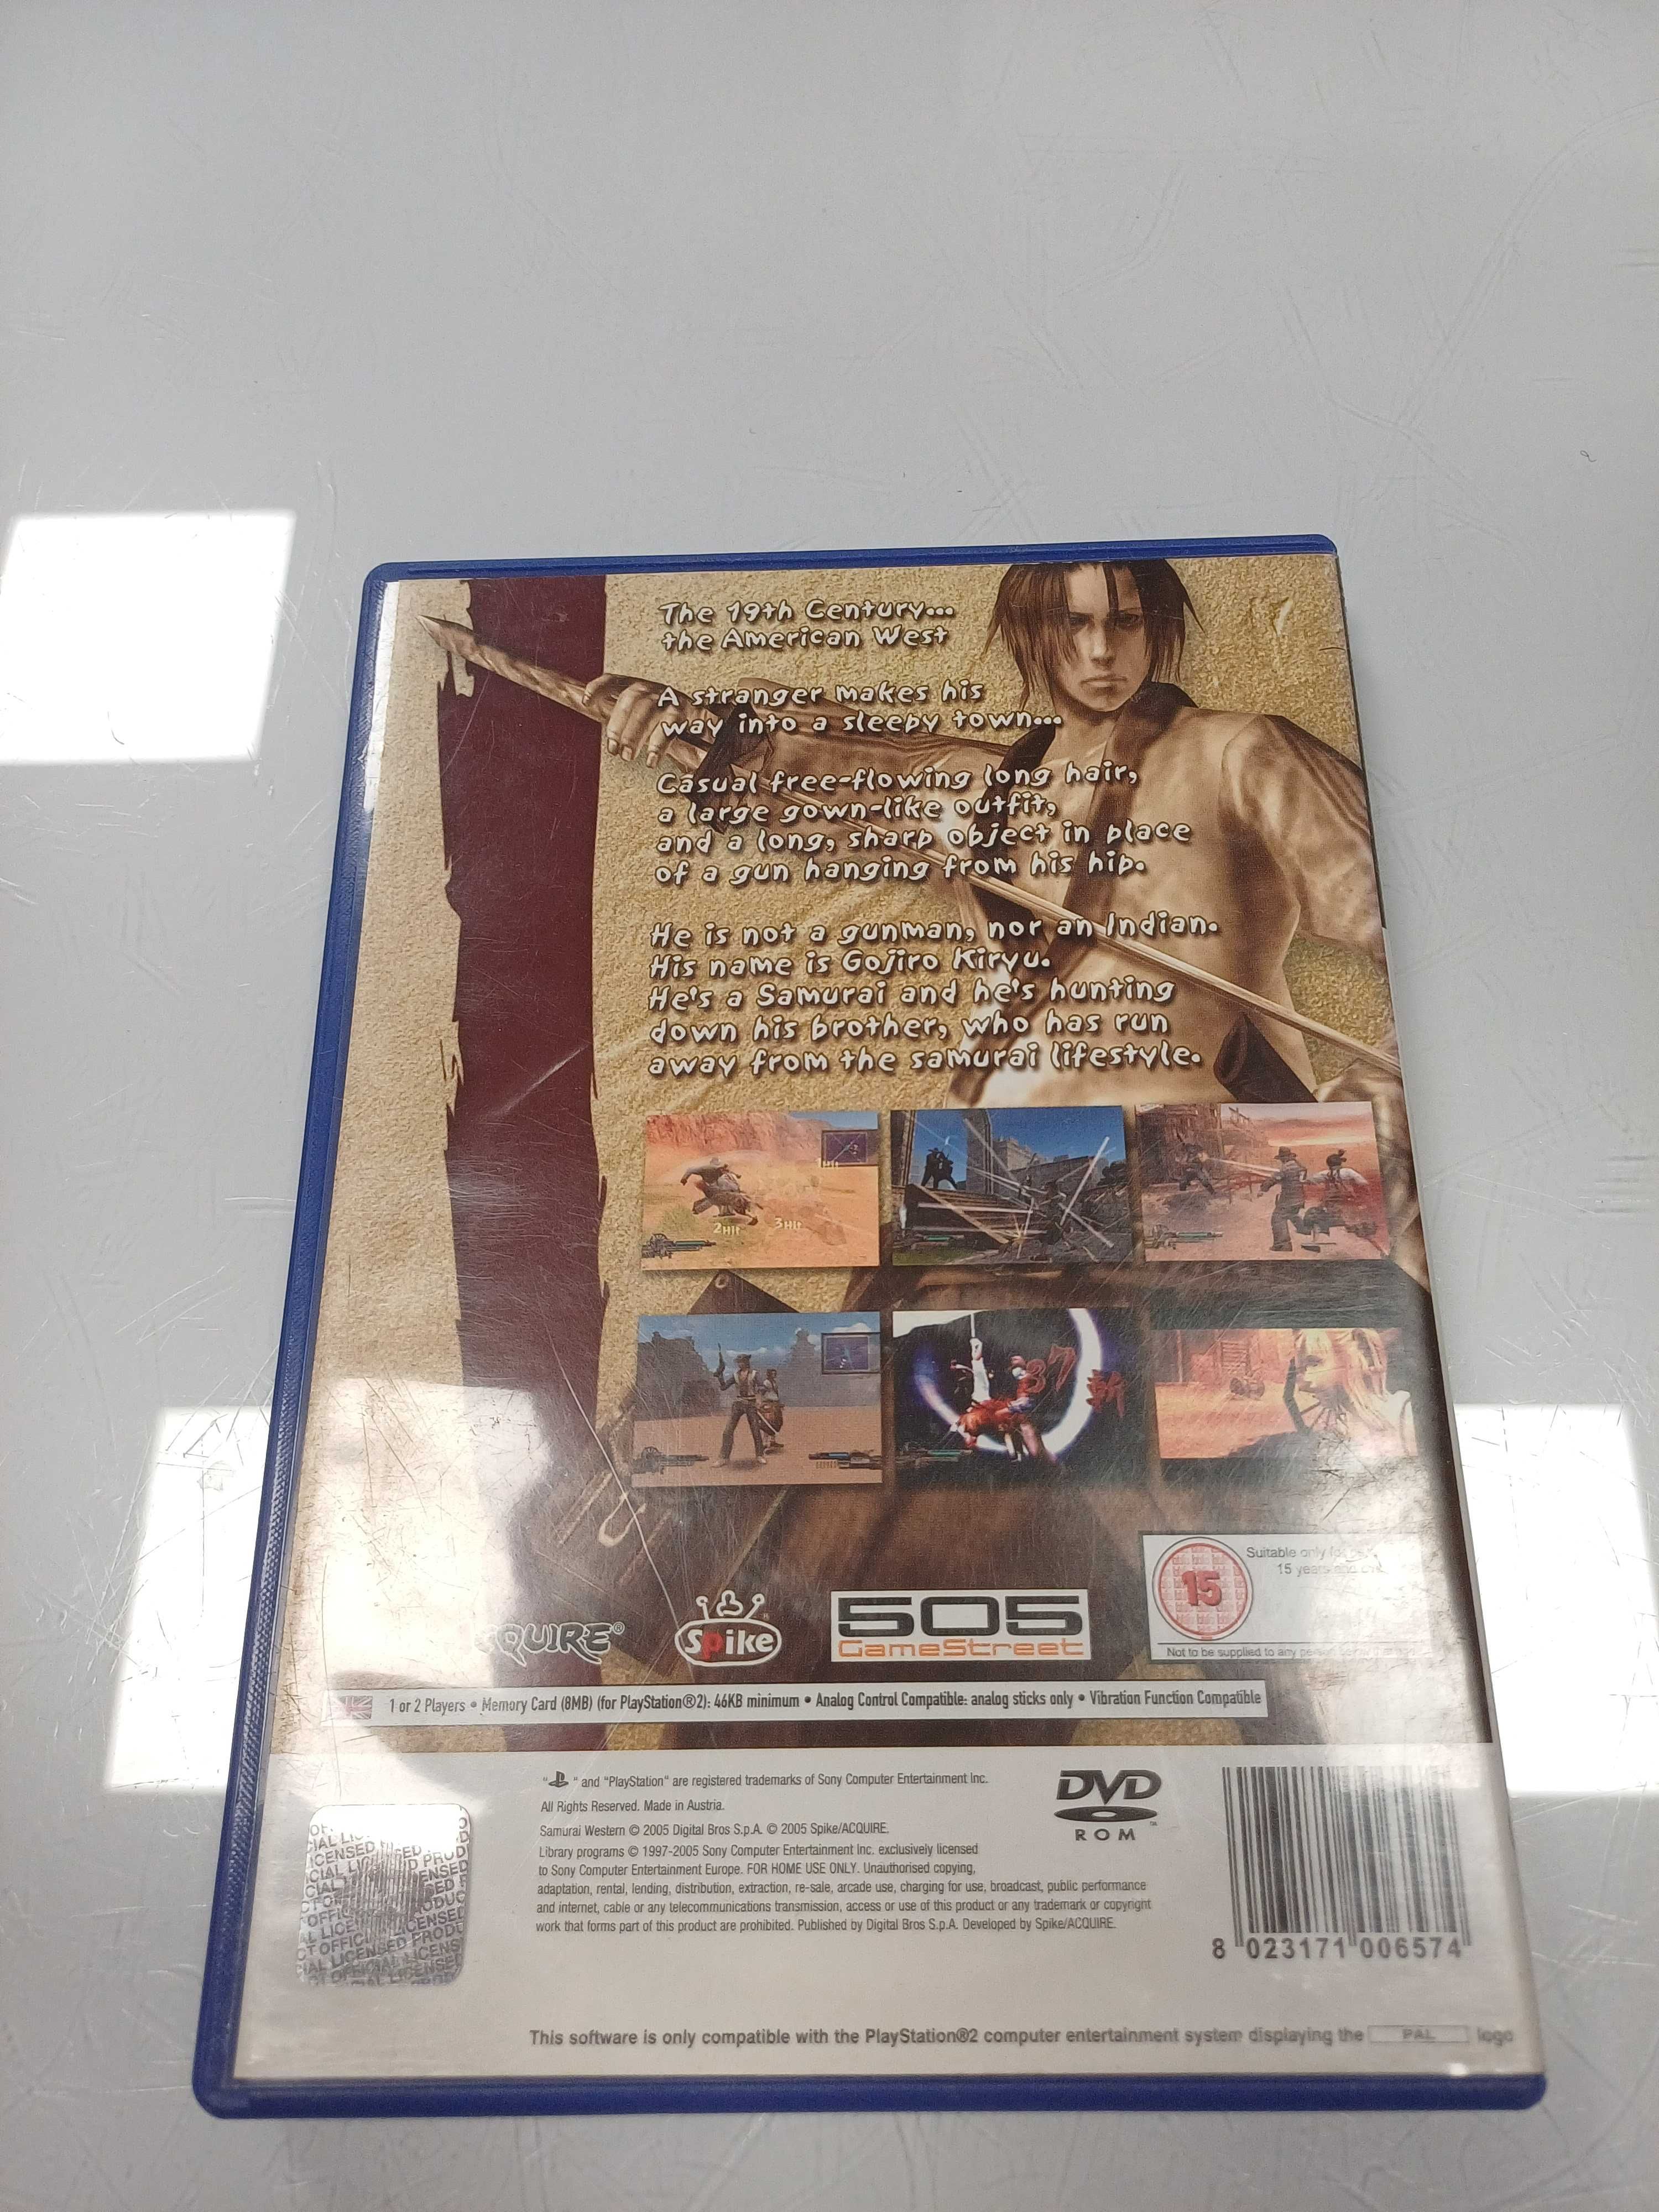 Gra PS2 PlayStation 2 Samurai Western - PAL - Angielska - Gwarancja